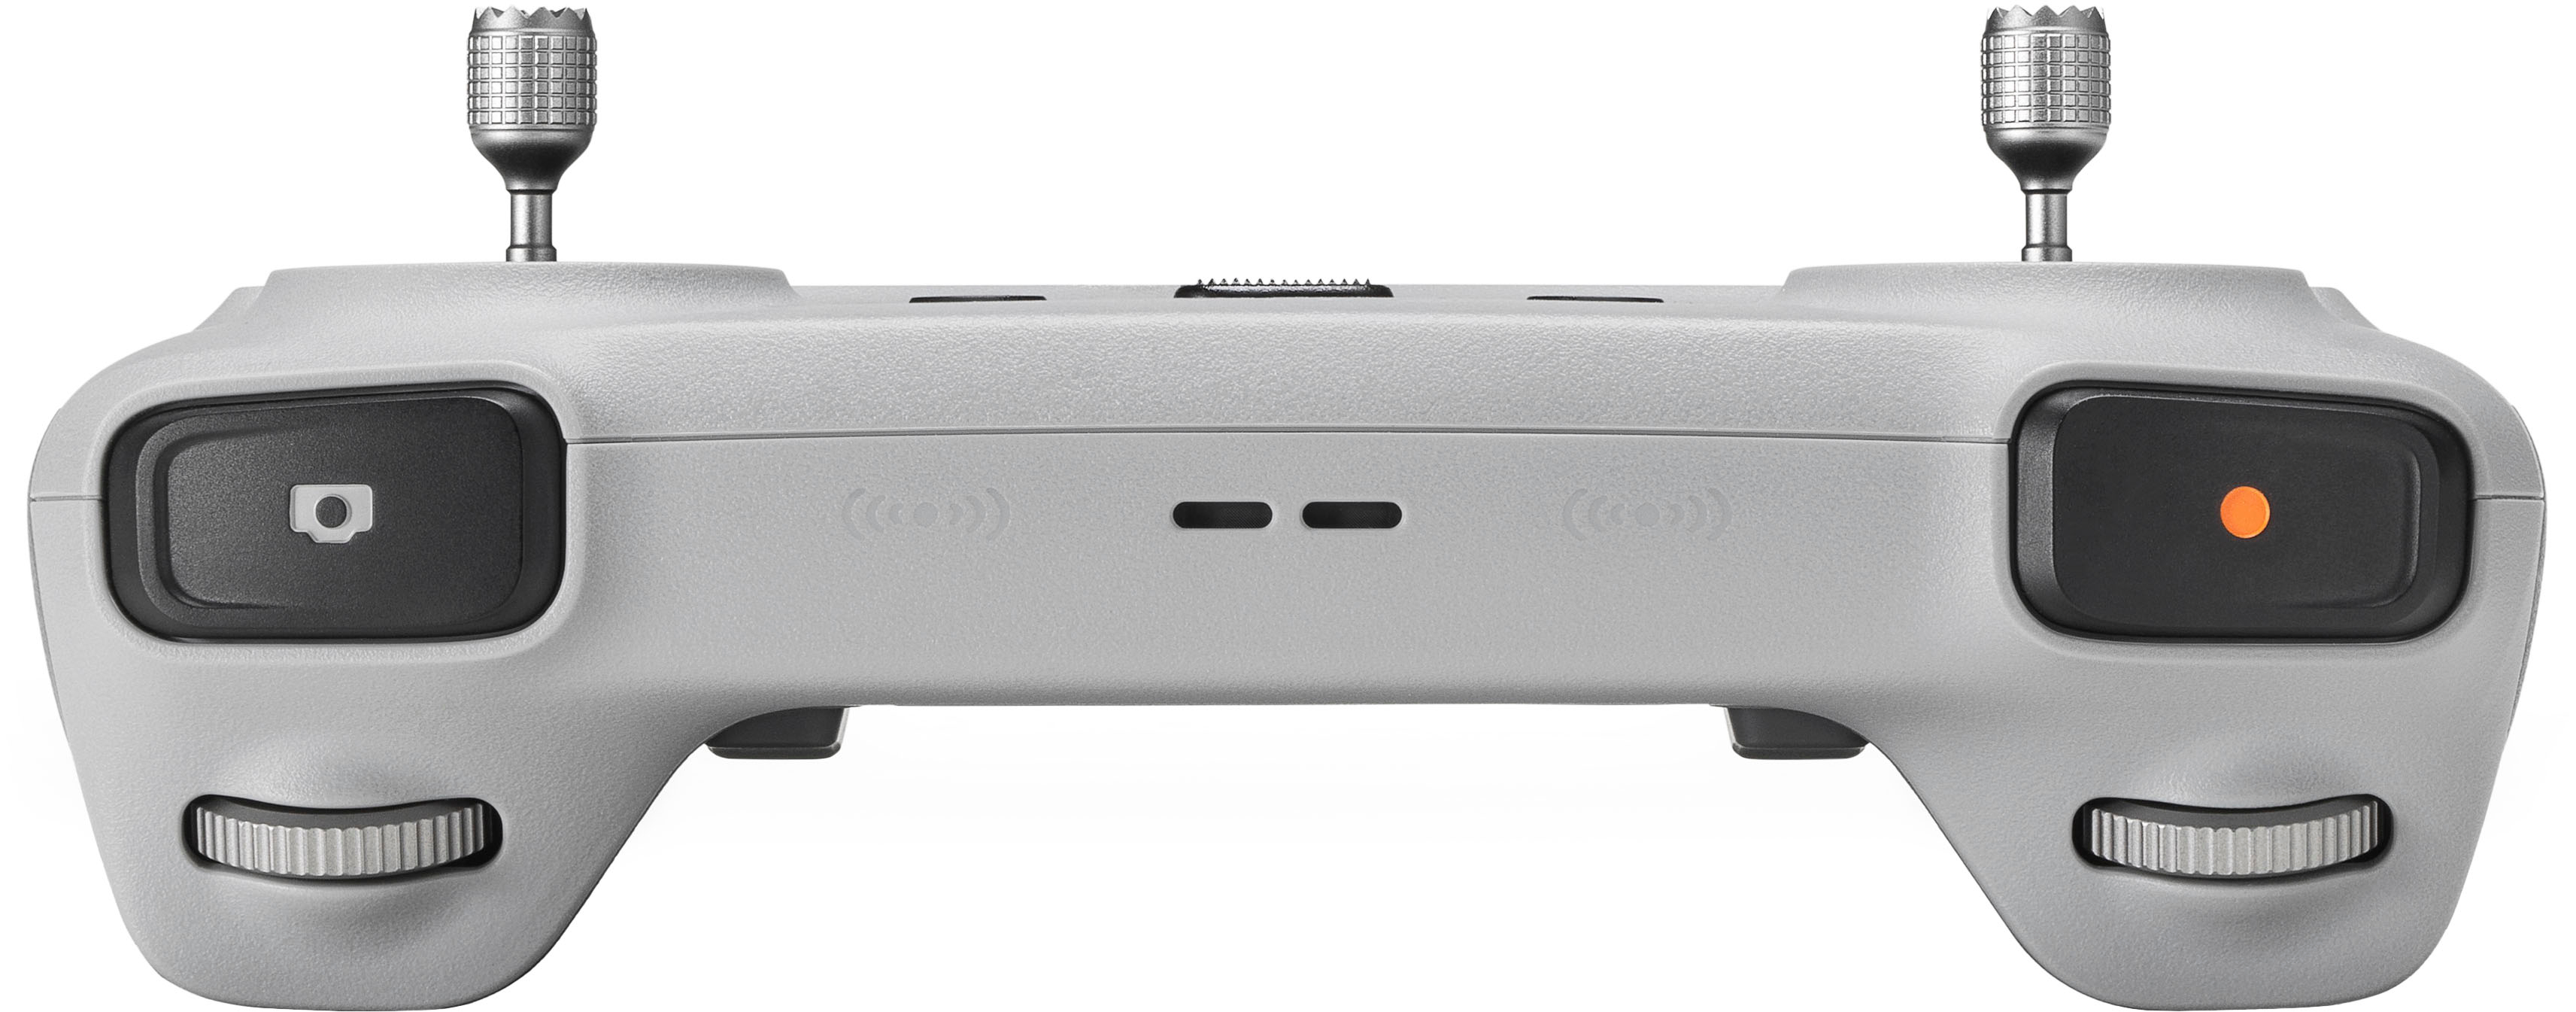 DJI Mini 3 Pro: DJI RC Remote Controller First Review